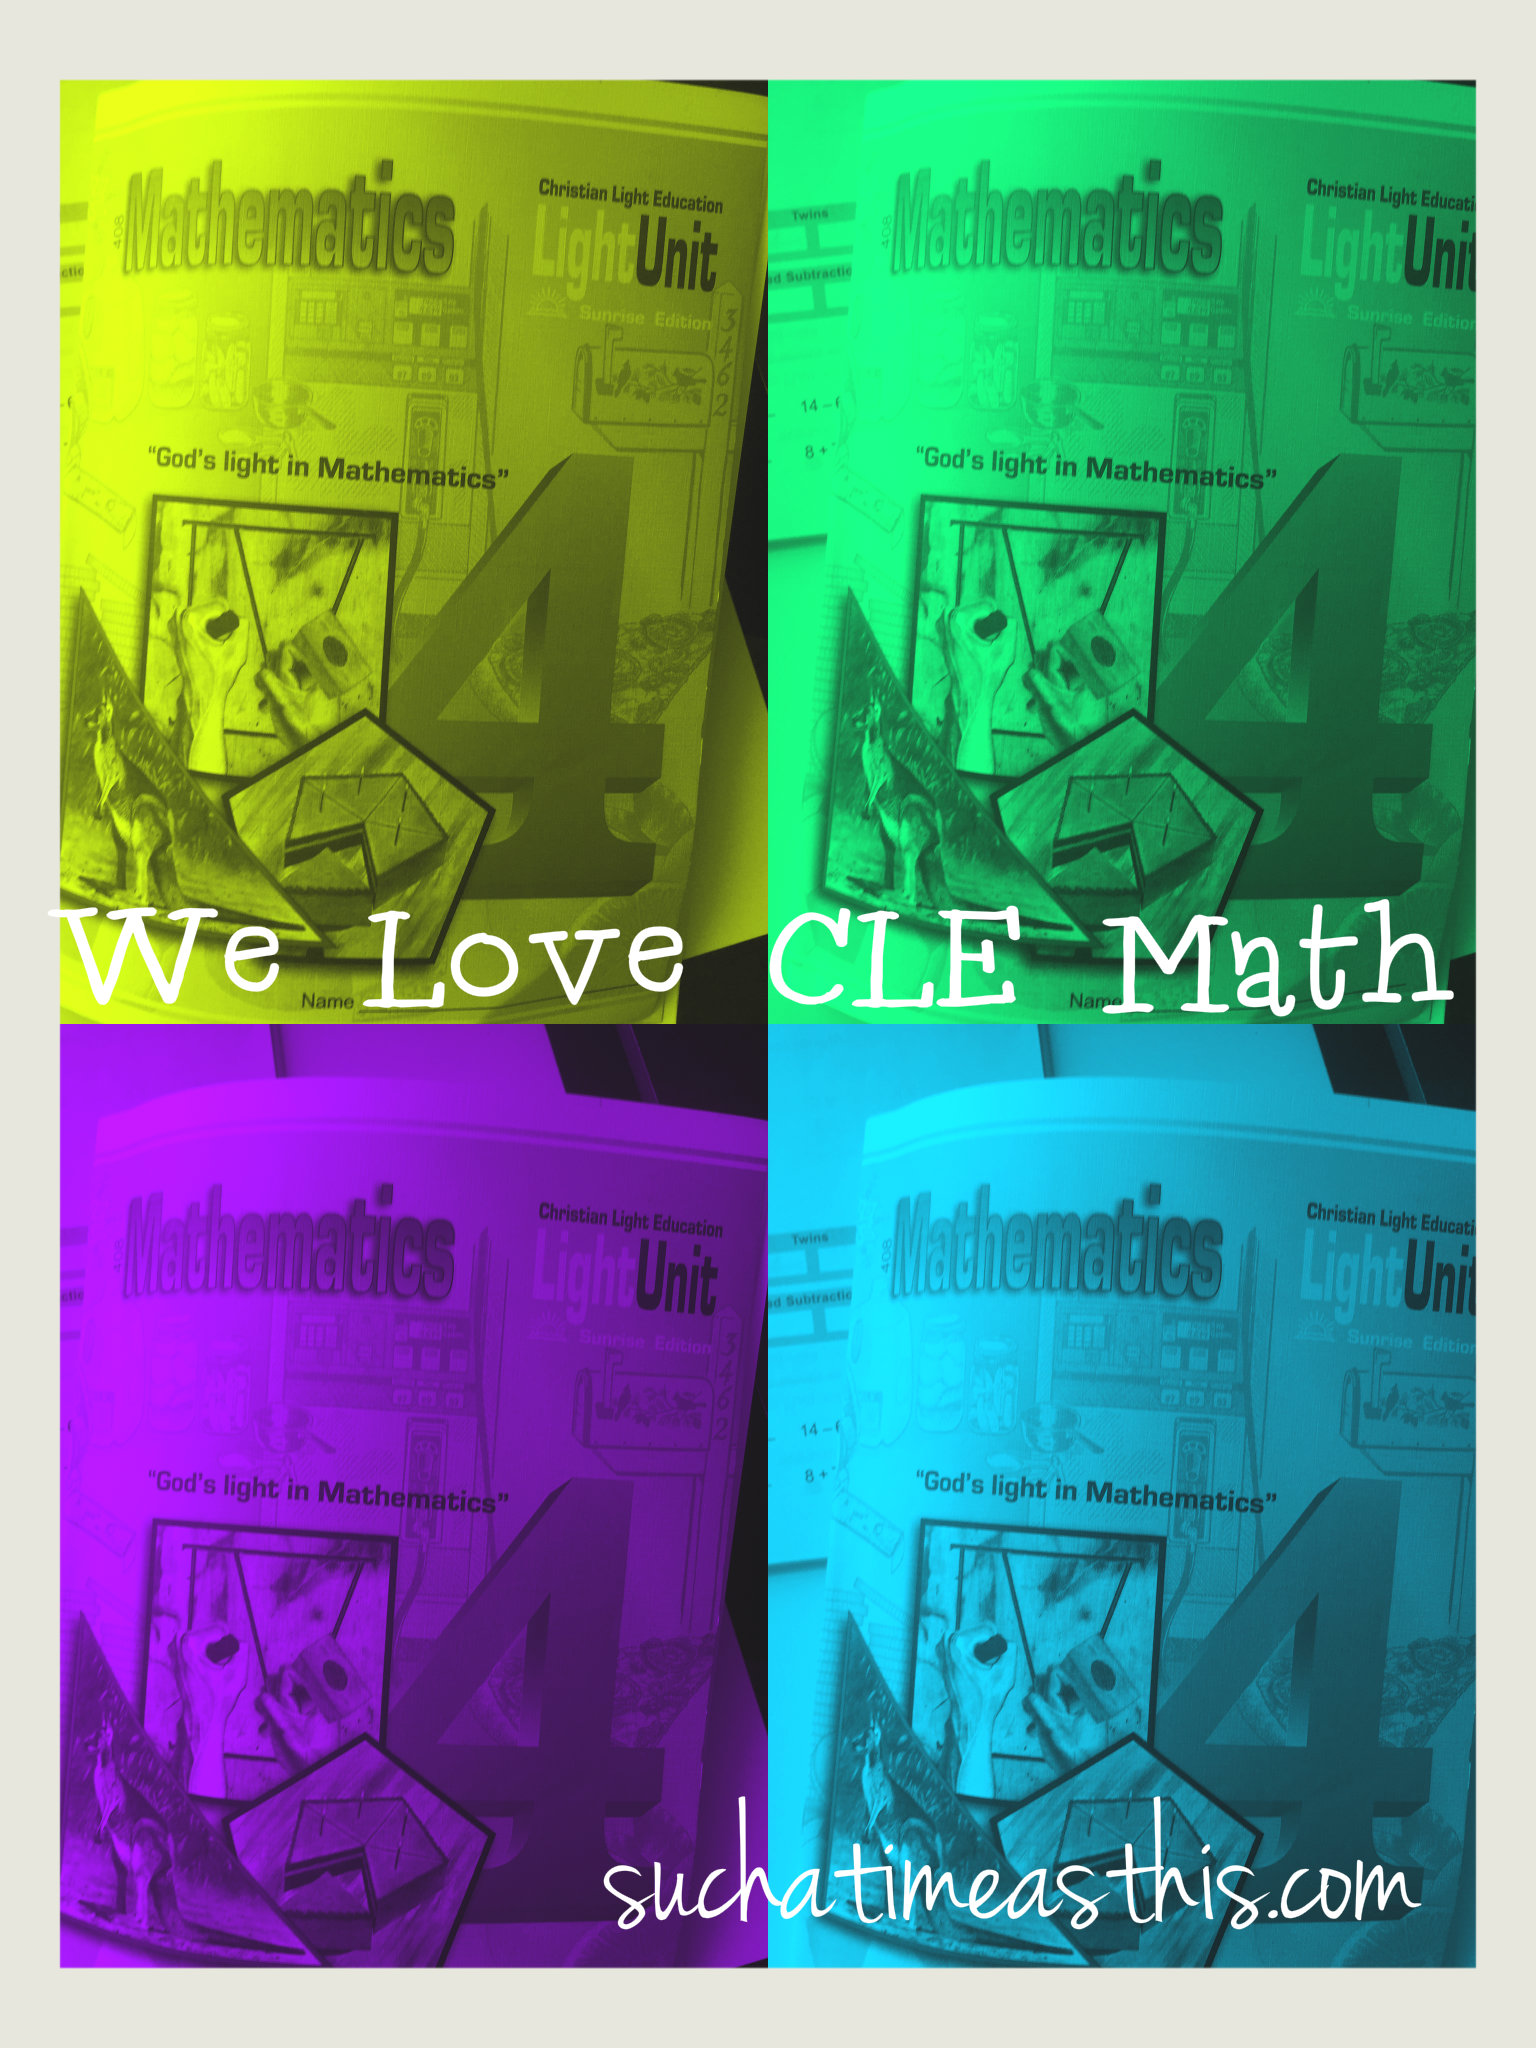 We love CLE Math